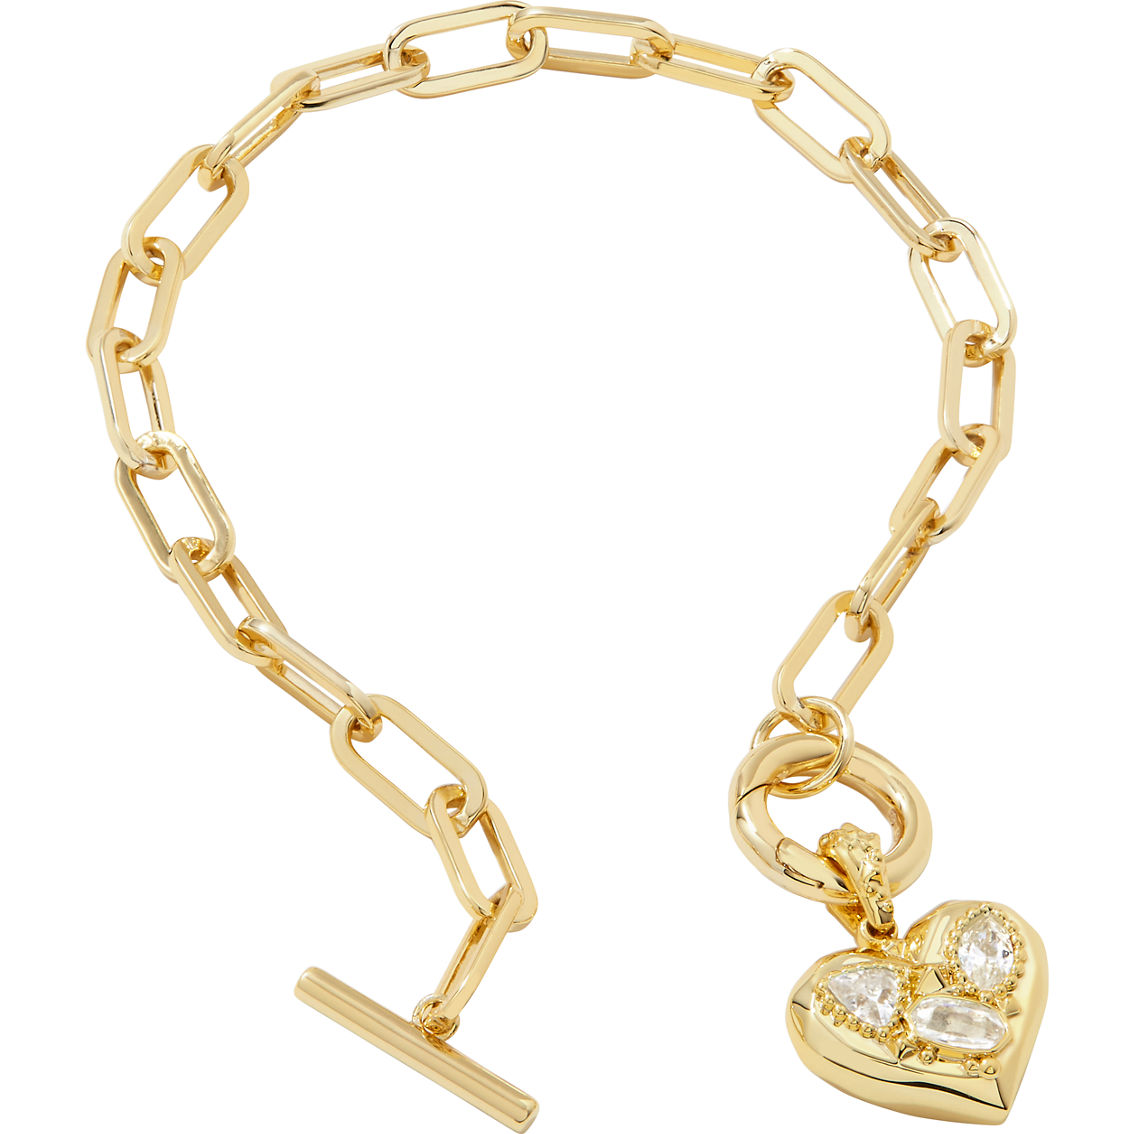 Kendra Scott Penny White Cubic Zirconia Goldtone Heart Chain Bracelet - Image 2 of 2